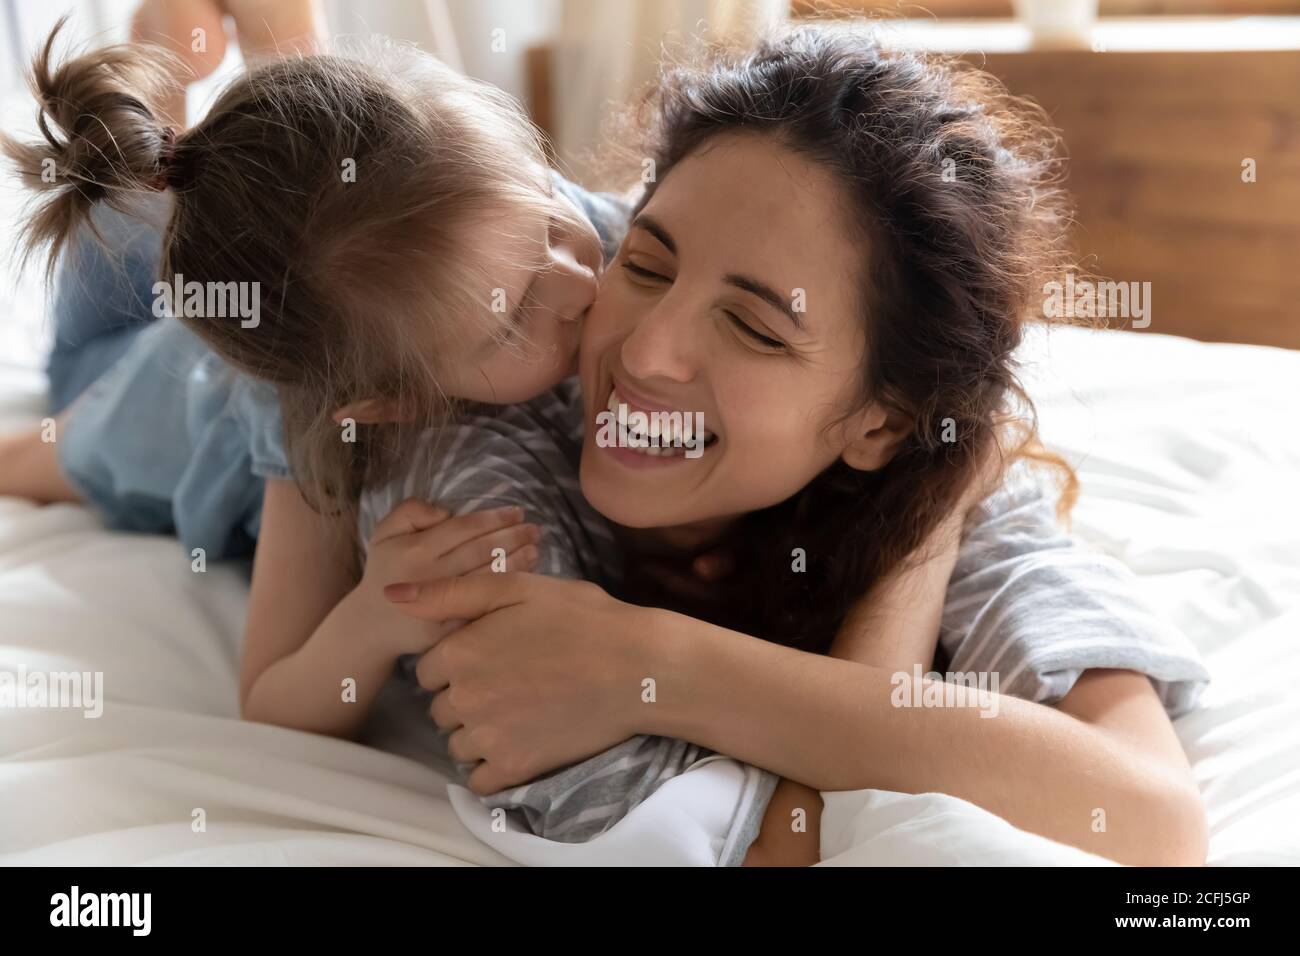 La hija besa la mejilla de la madre acostada en la cama se siente feliz Foto de stock